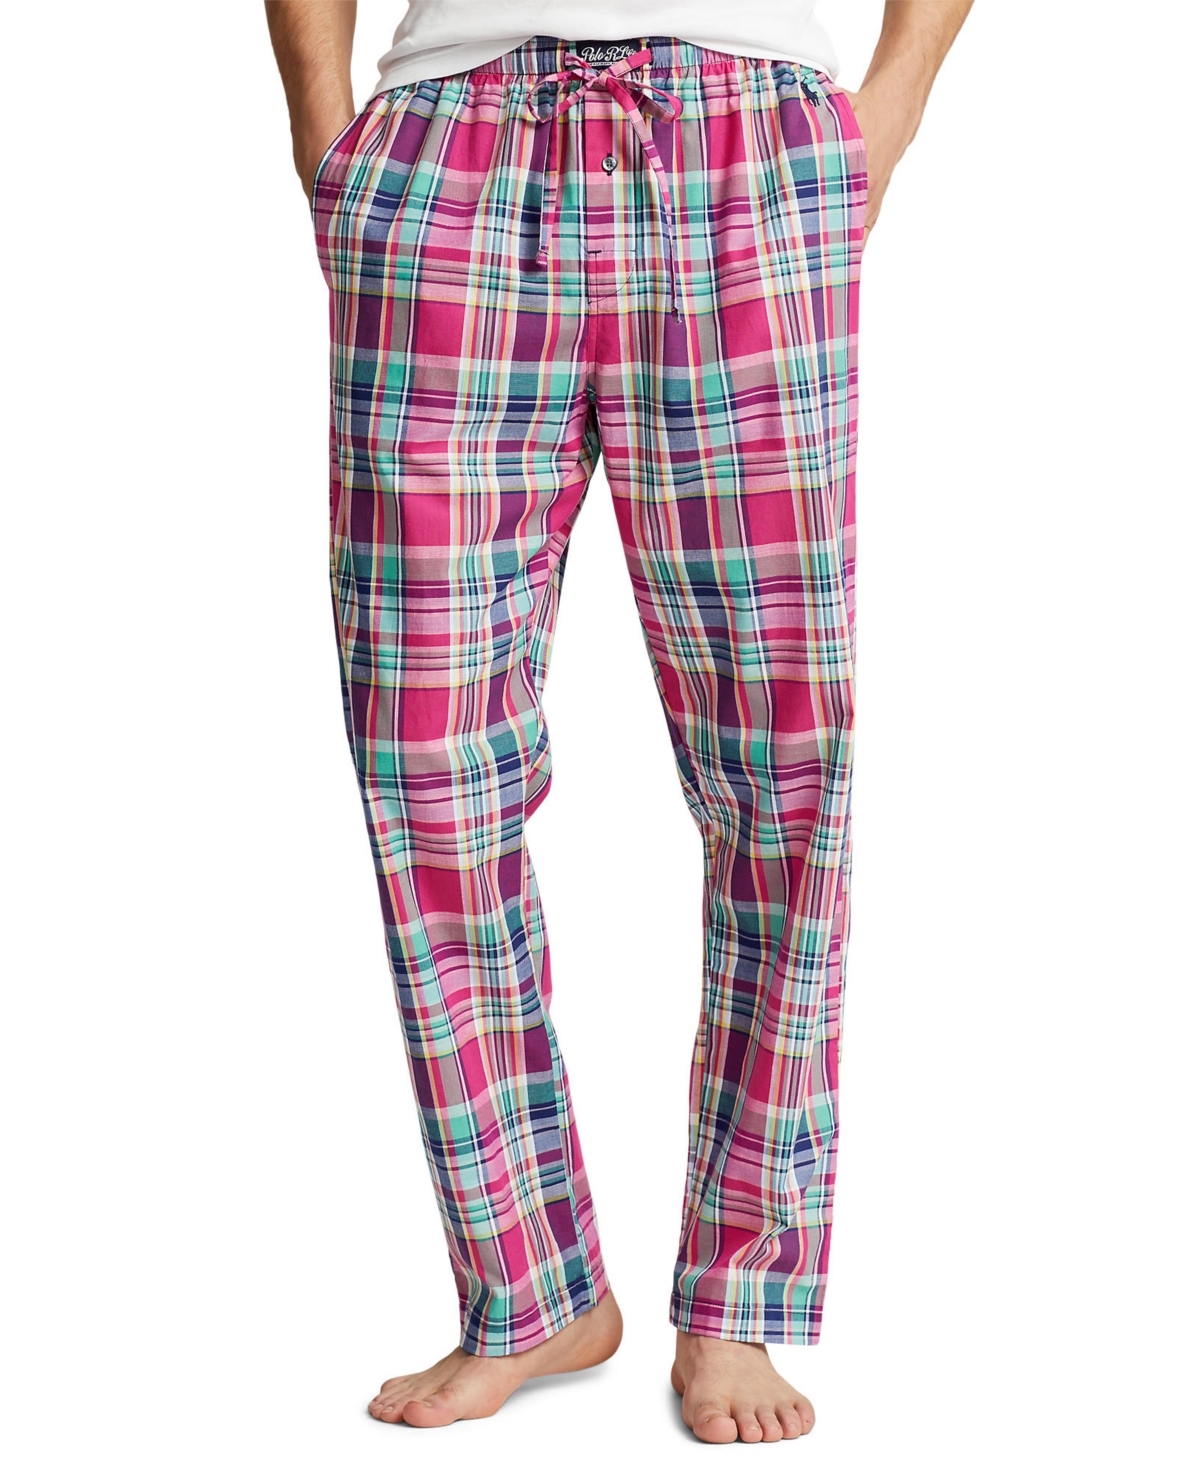 Men's Printed Woven Pajama Pants - PALOMA PLAID/CRUISE NAVY PP